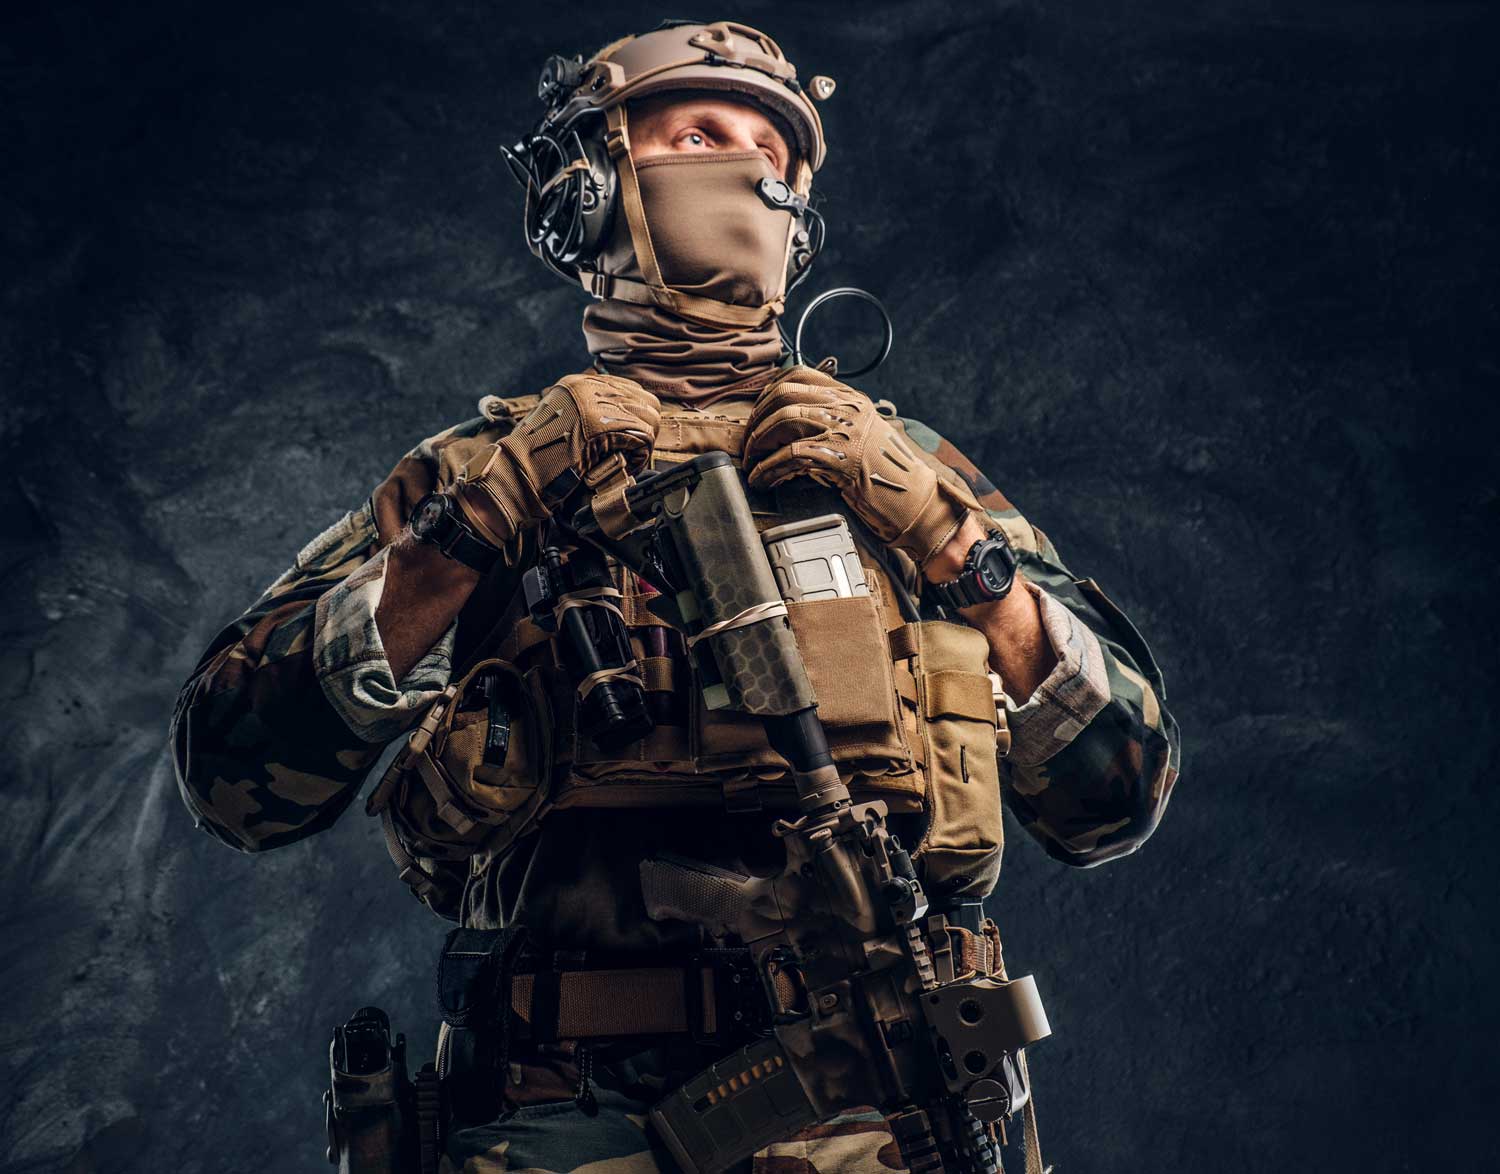 elite unit special forces soldier camouflage uniform studio photo against dark textured wall